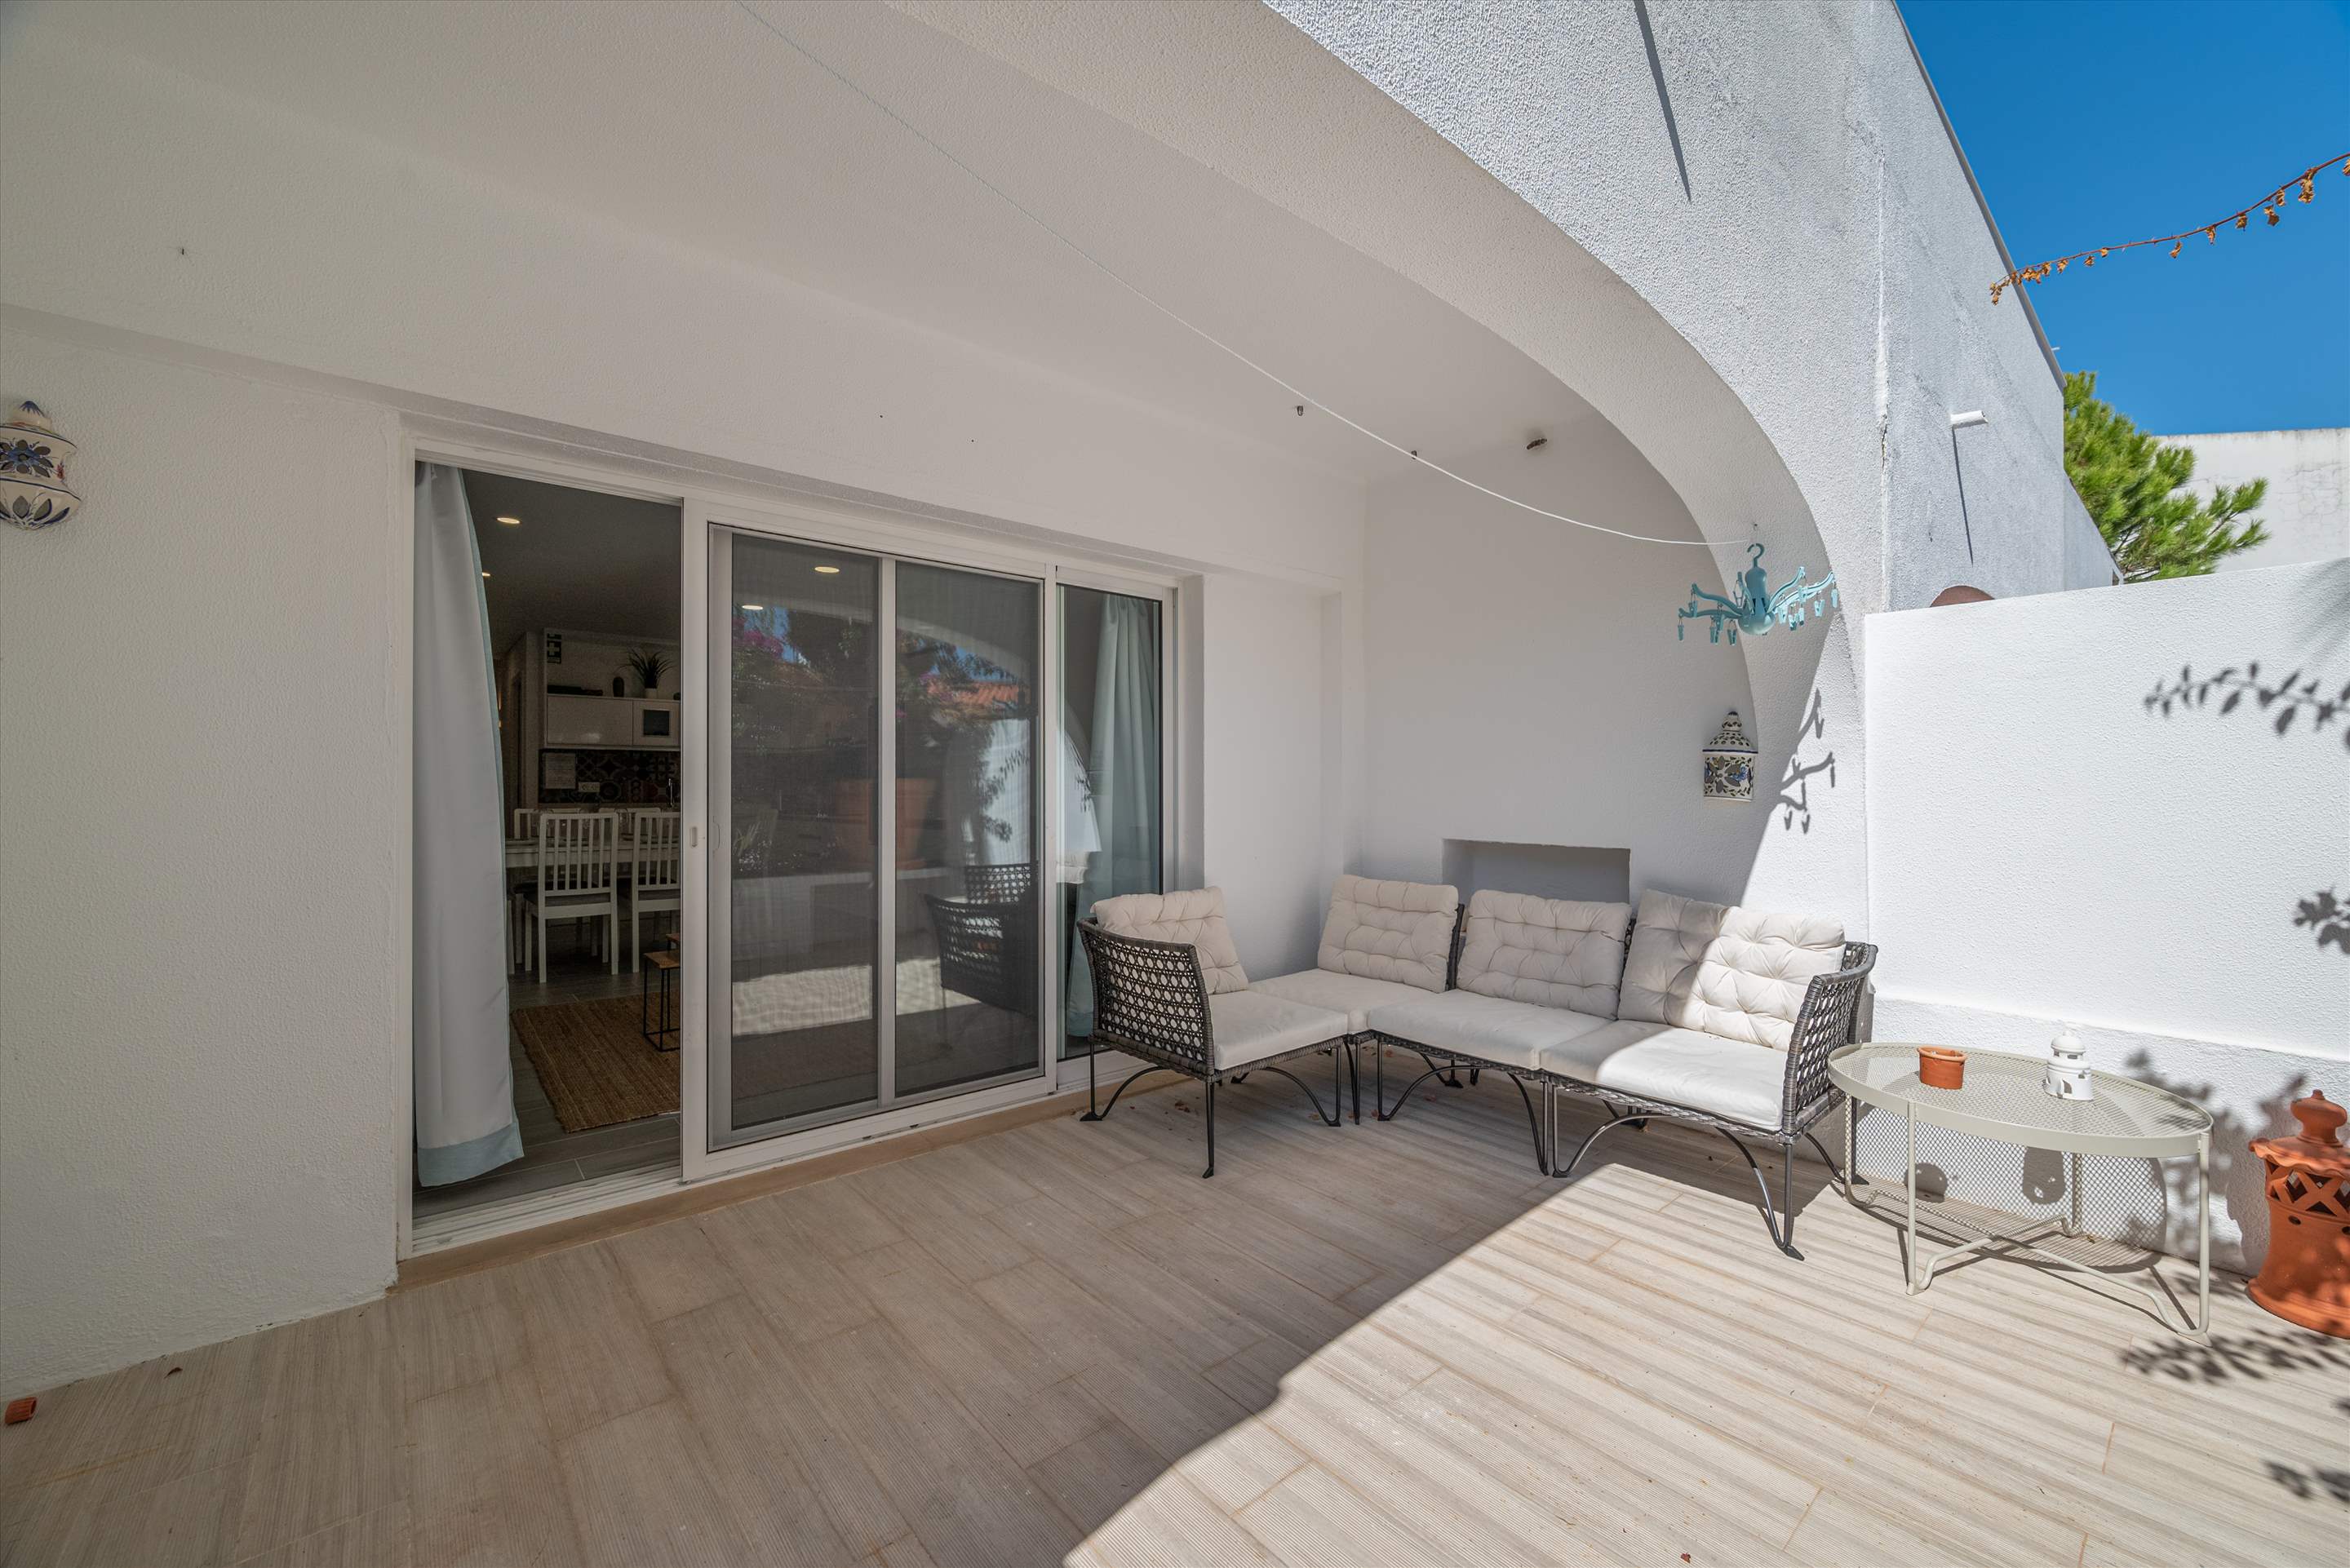 Apartment Poinsettia, 1 bedroom apartment in Vale do Lobo, Algarve Photo #2